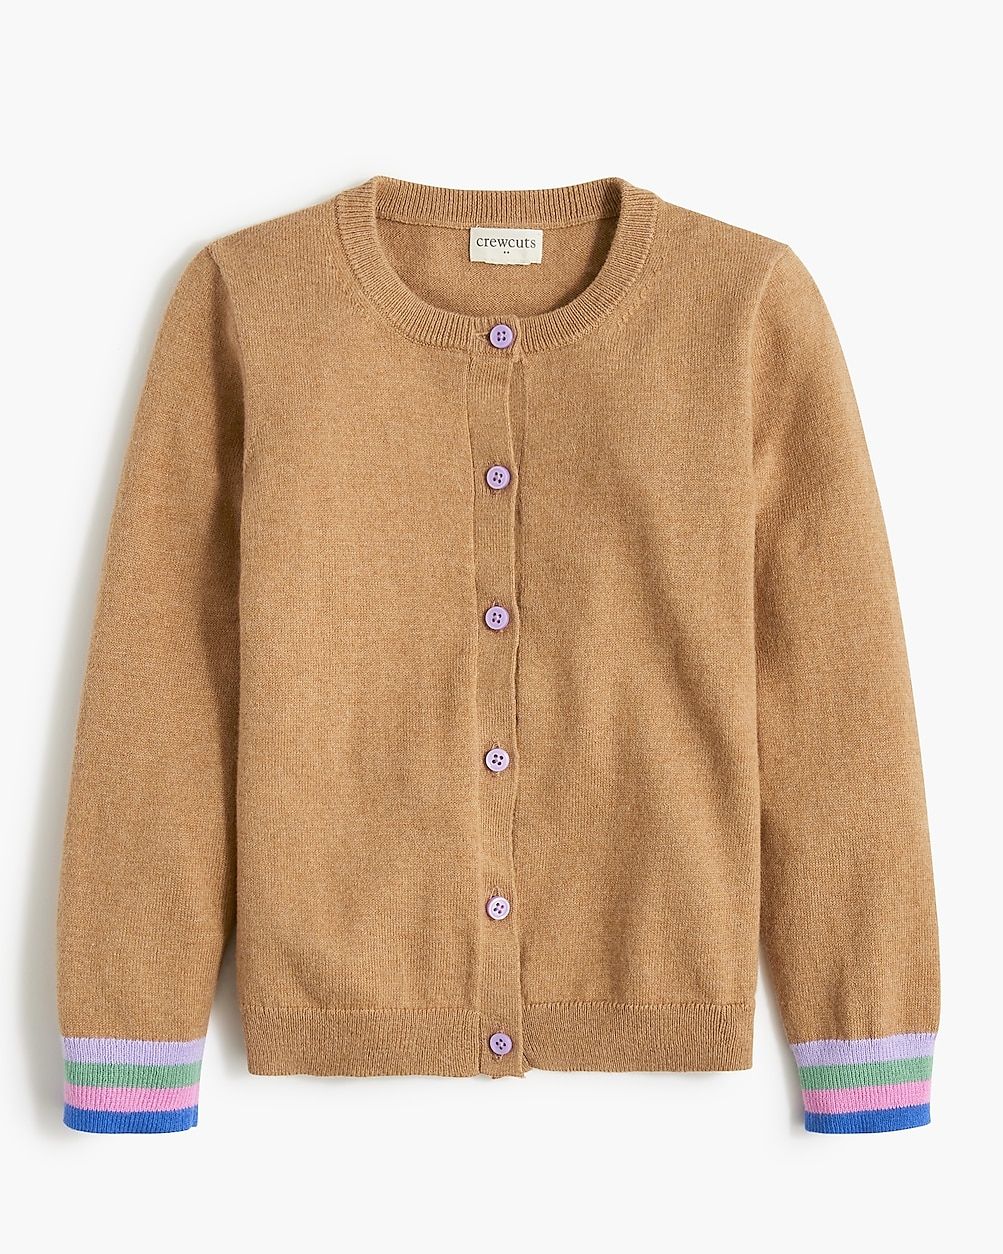 Girls' Casey cardigan sweater | J.Crew Factory